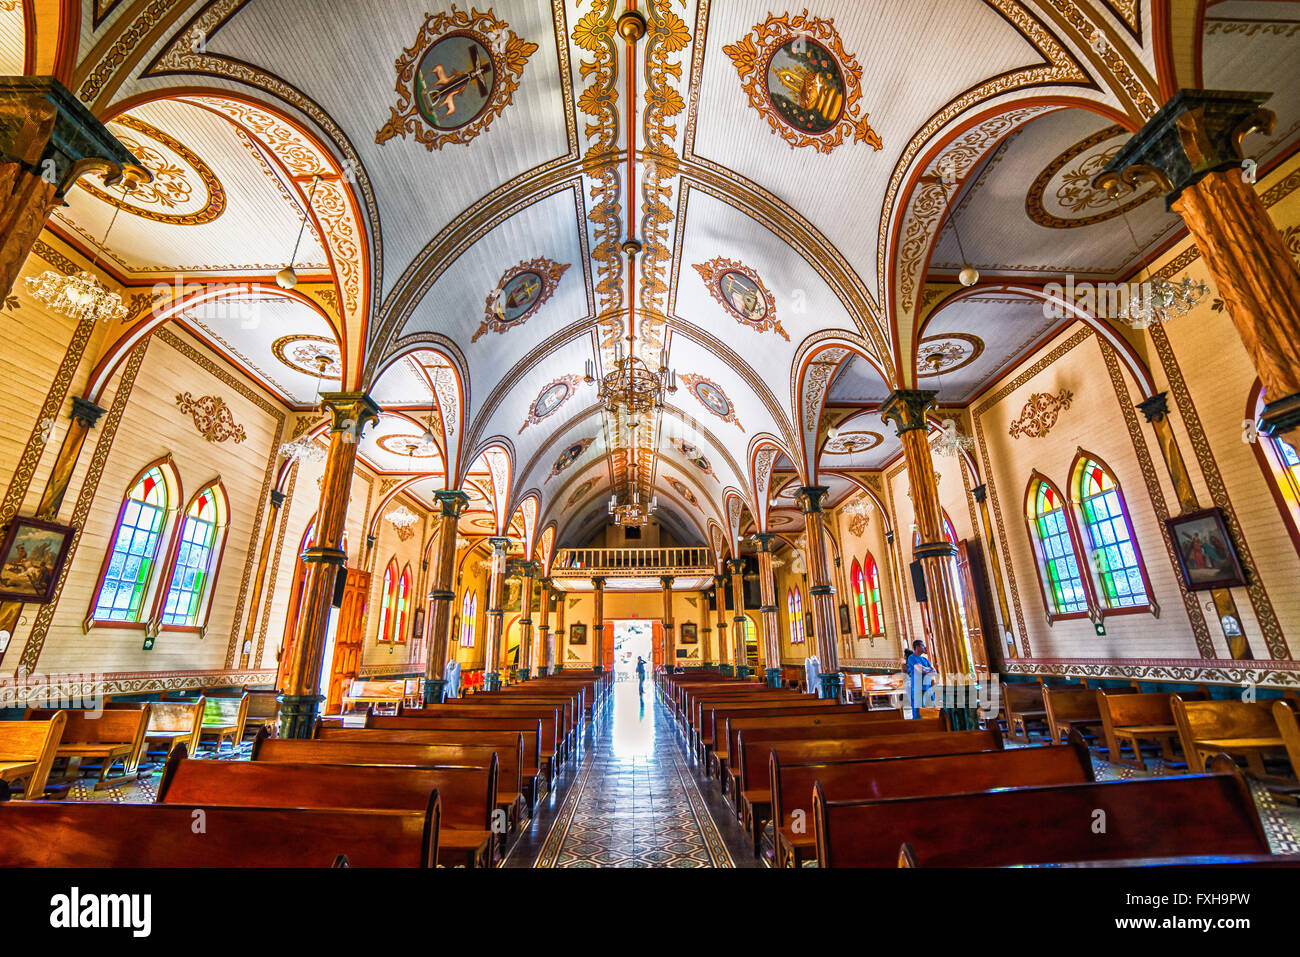 Interior view of Zarcero Catholic church in Costa Rica Stock Photo